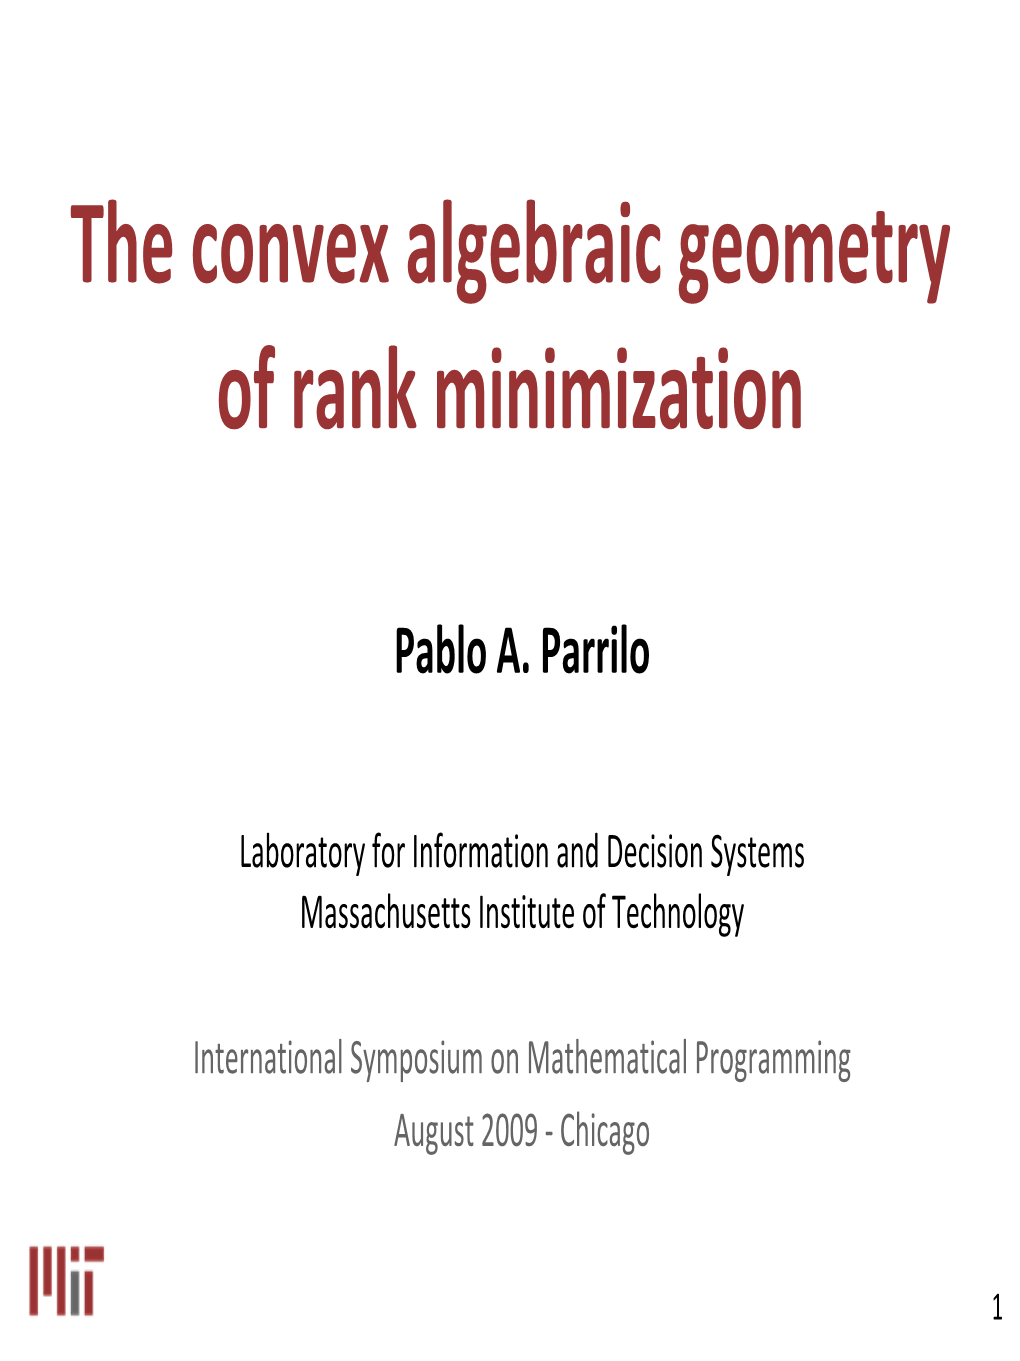 Convex Algebraic Geometry of Rank Minimization